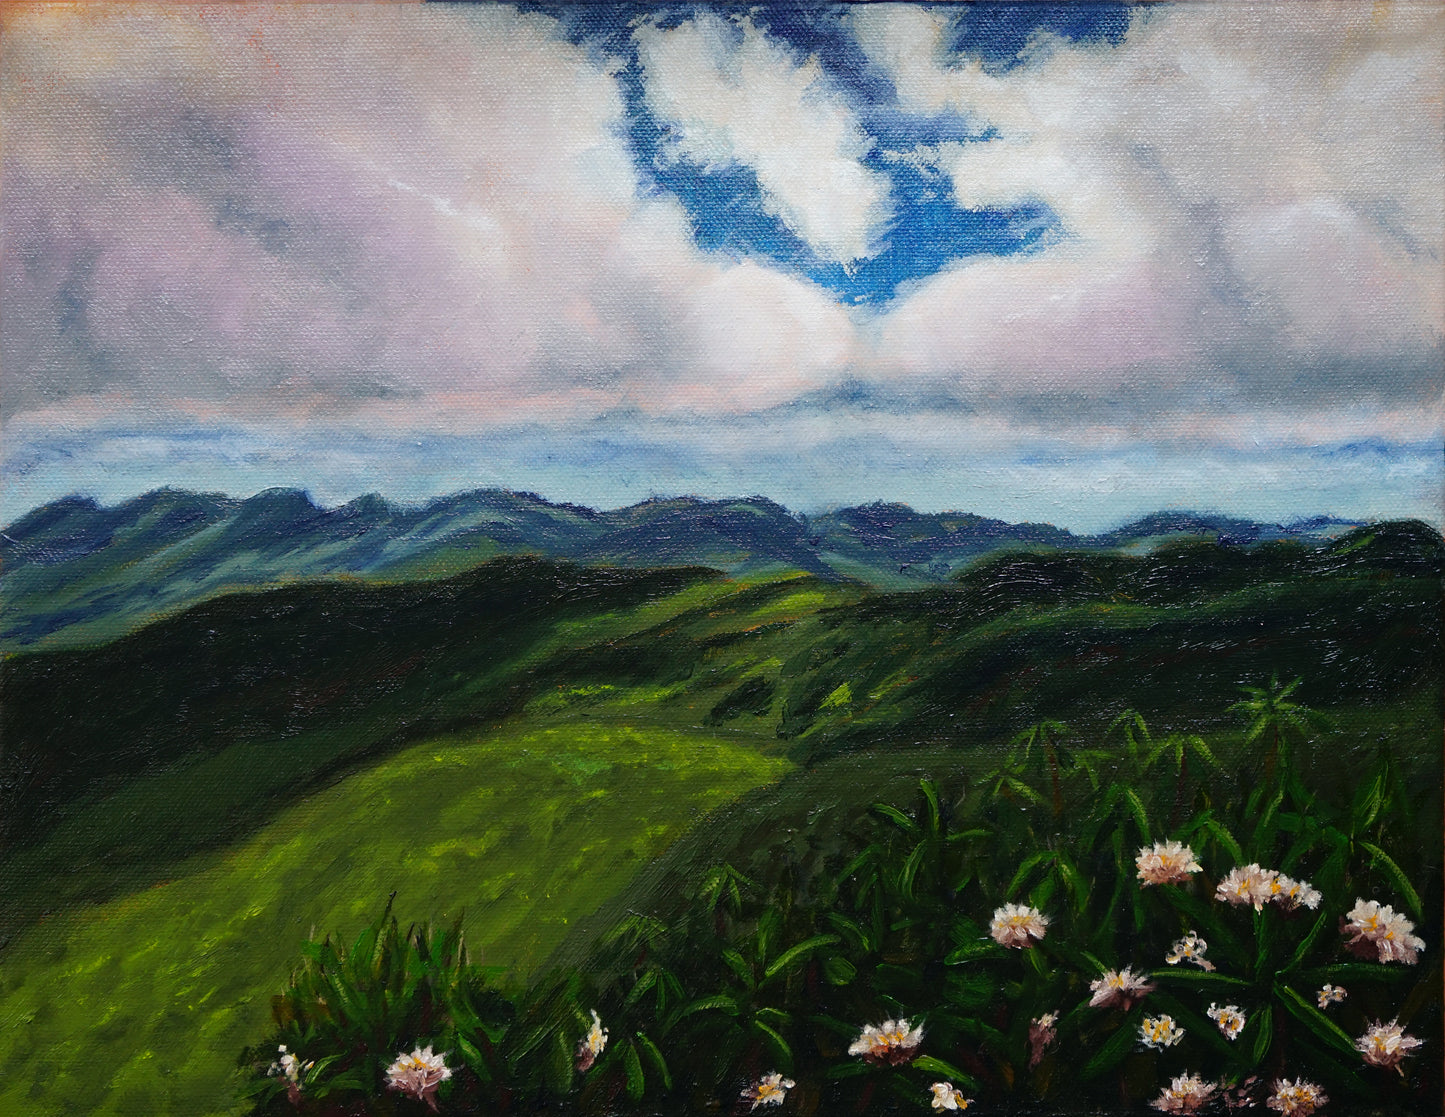 Emerald Mountains meet the sky-Original Painting